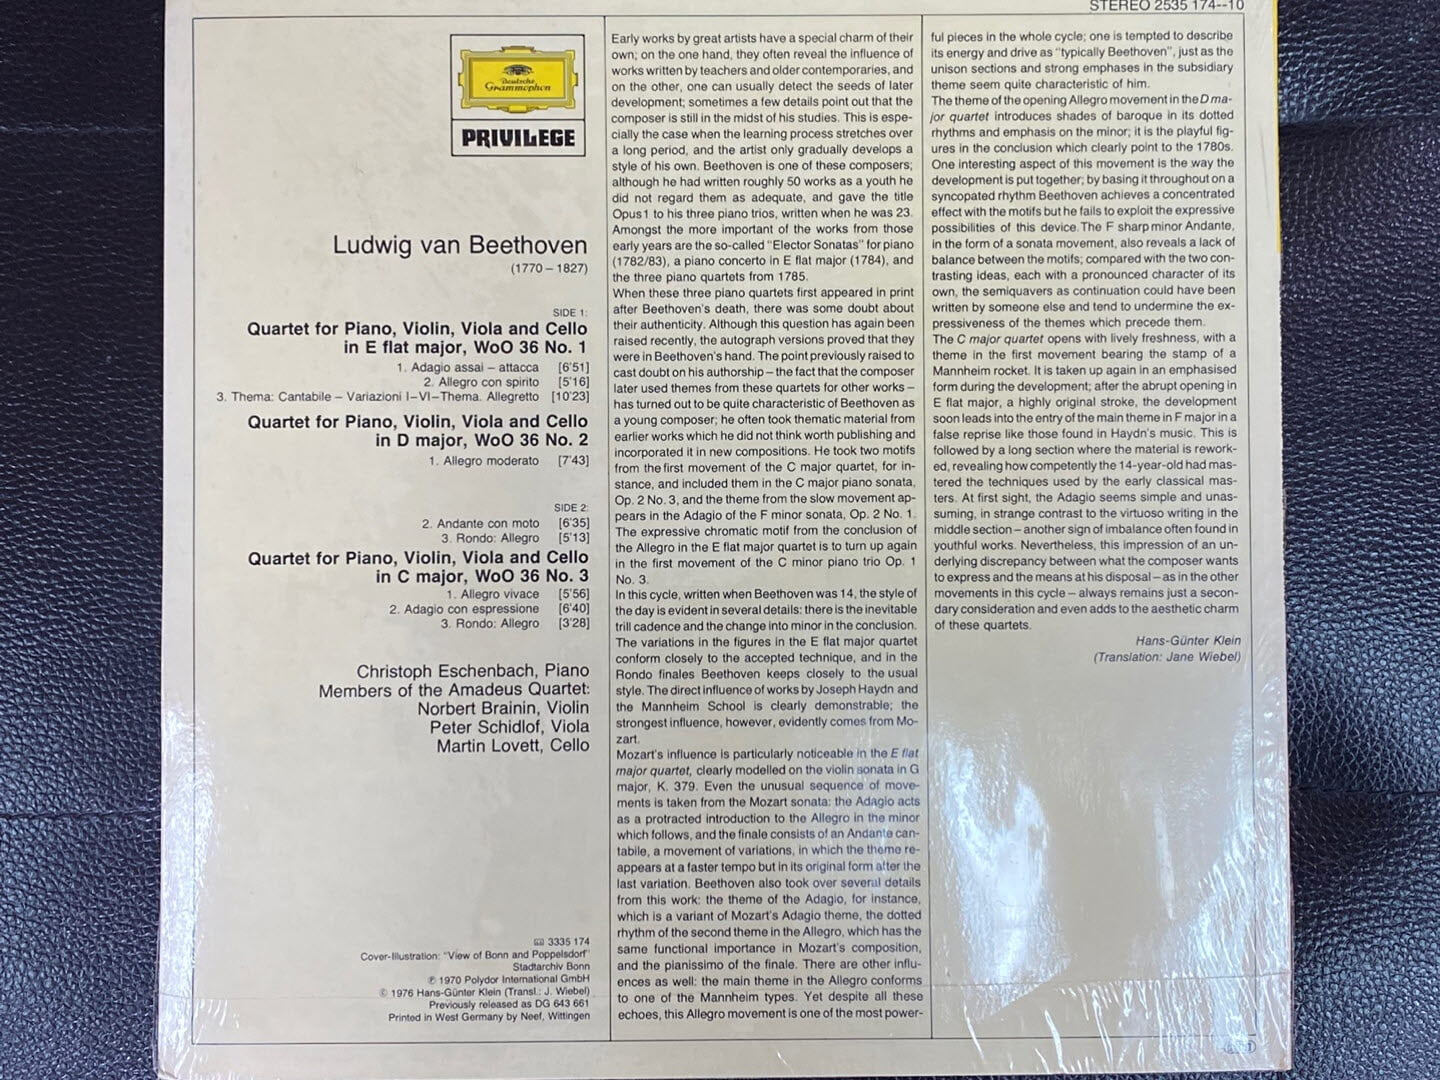 [LP] 아마데우스 콰르텟,크리스토프 에센바흐 - Beethoven The Piano Quartets LP [미개봉] [독일반]